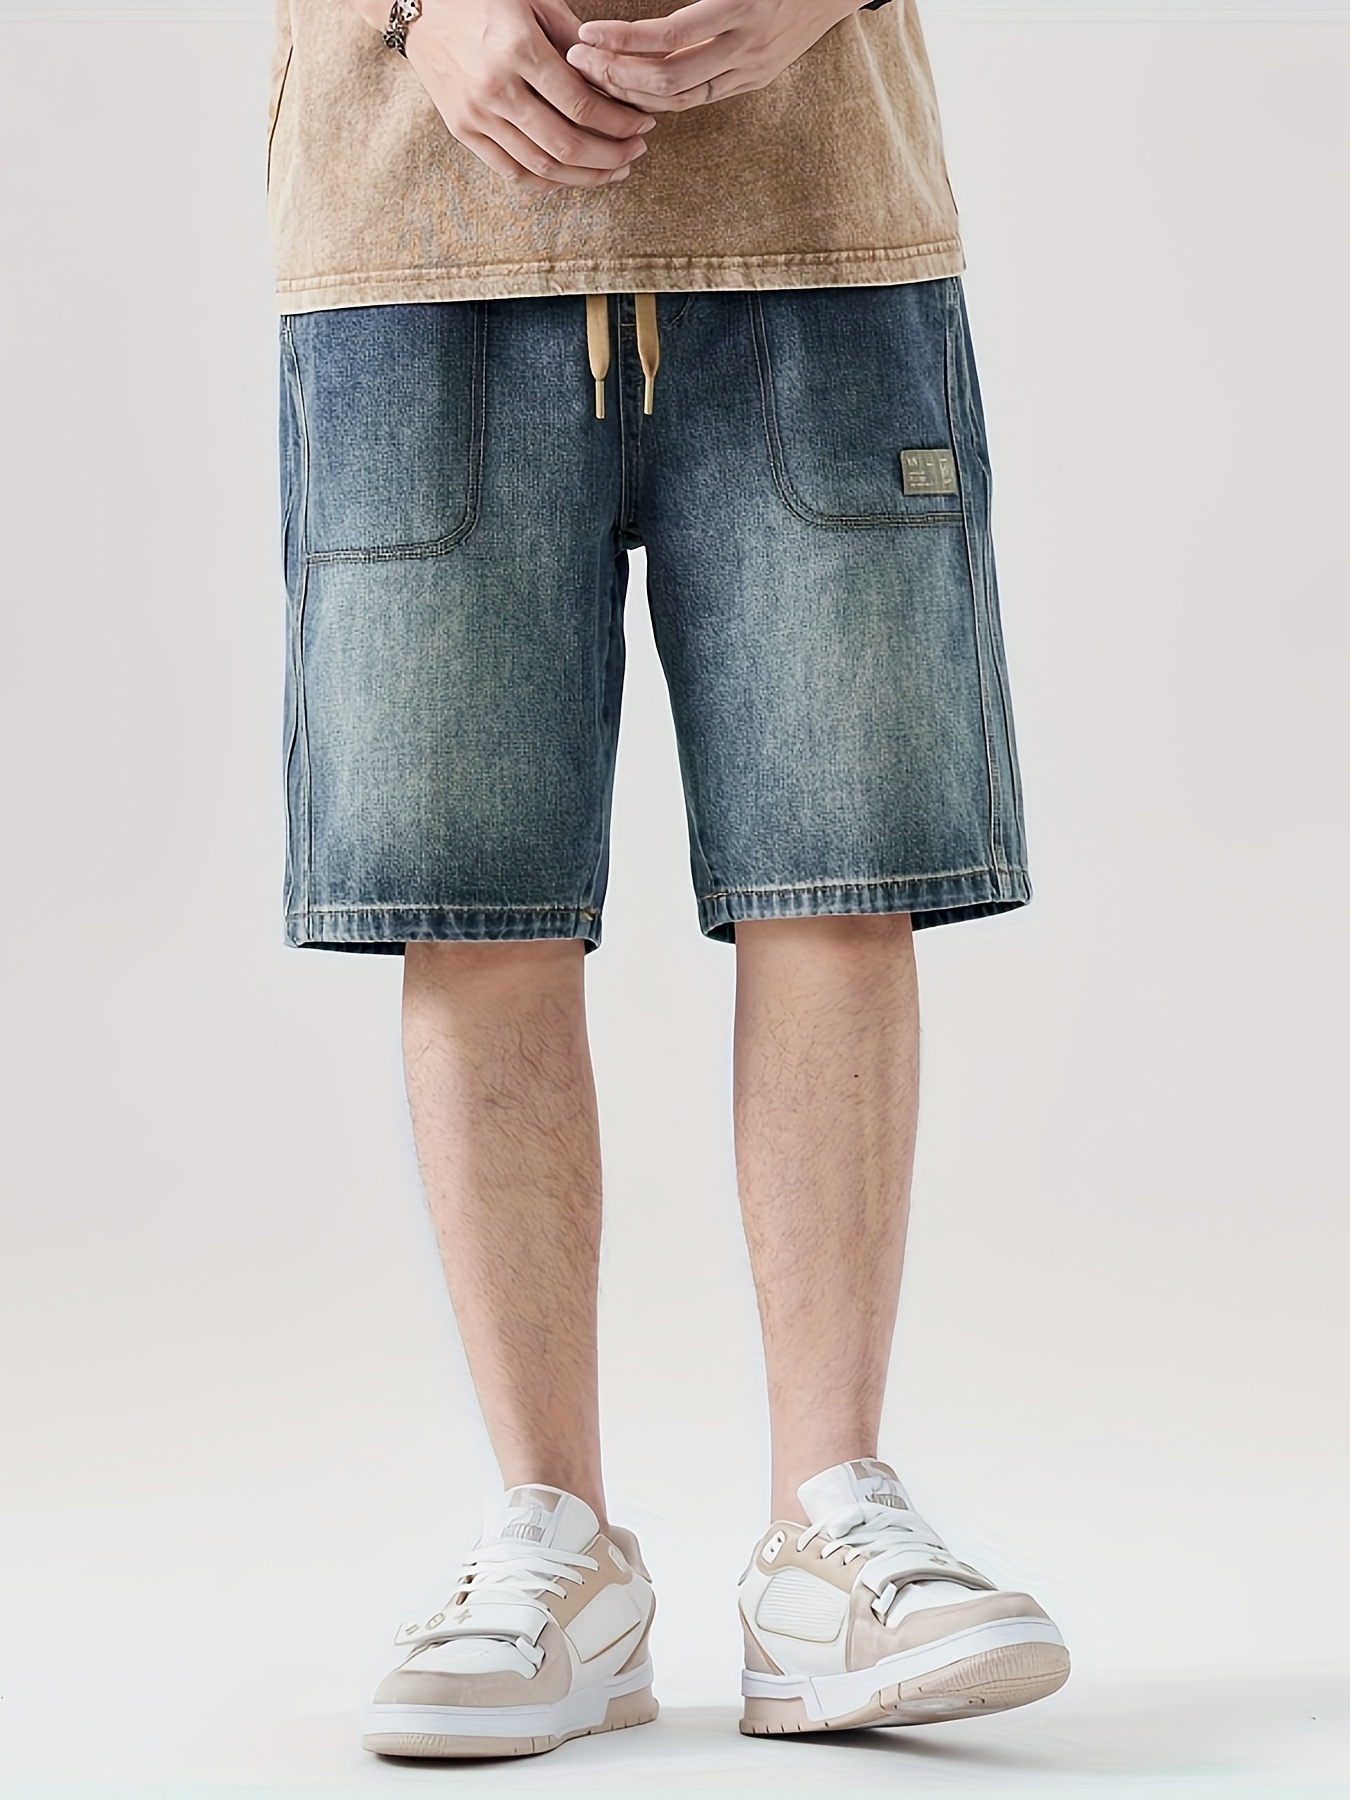 Shorts de carga jeans solto masculino com bolso grande, shorts